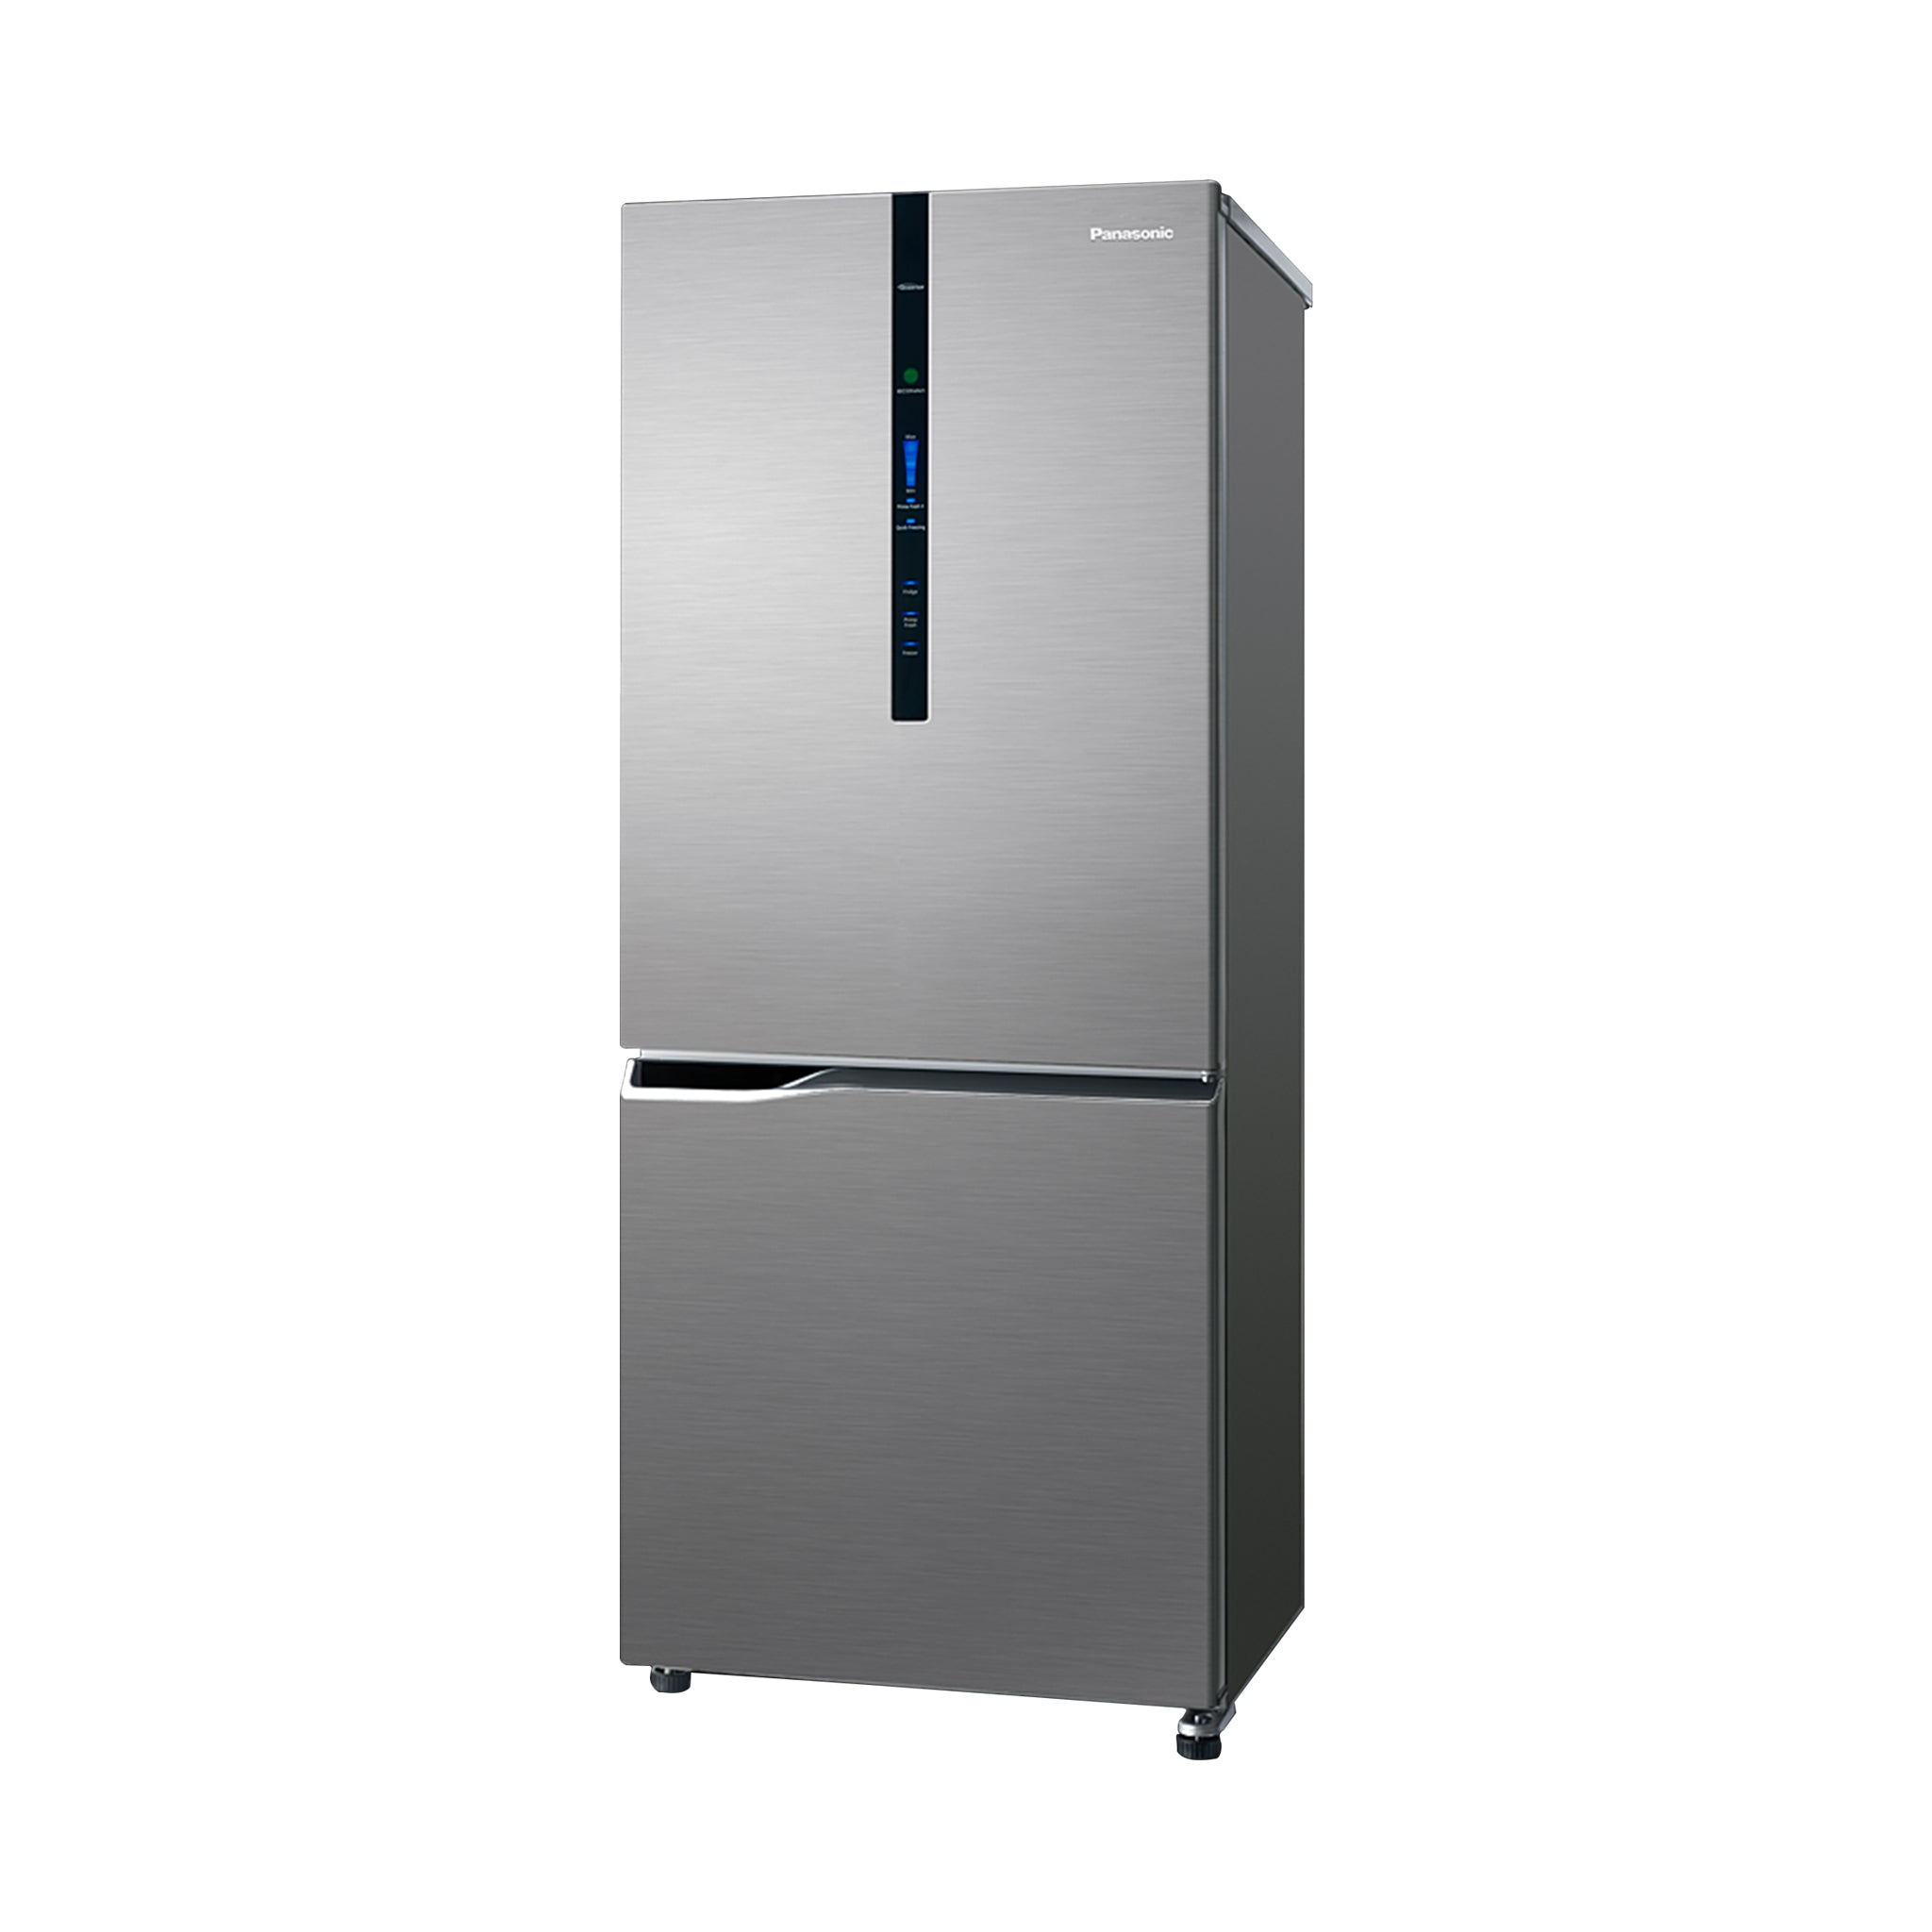 PANASONIC NR-BC360XSPH 2-Door Bottom Freezer Refrigerator Panasonic